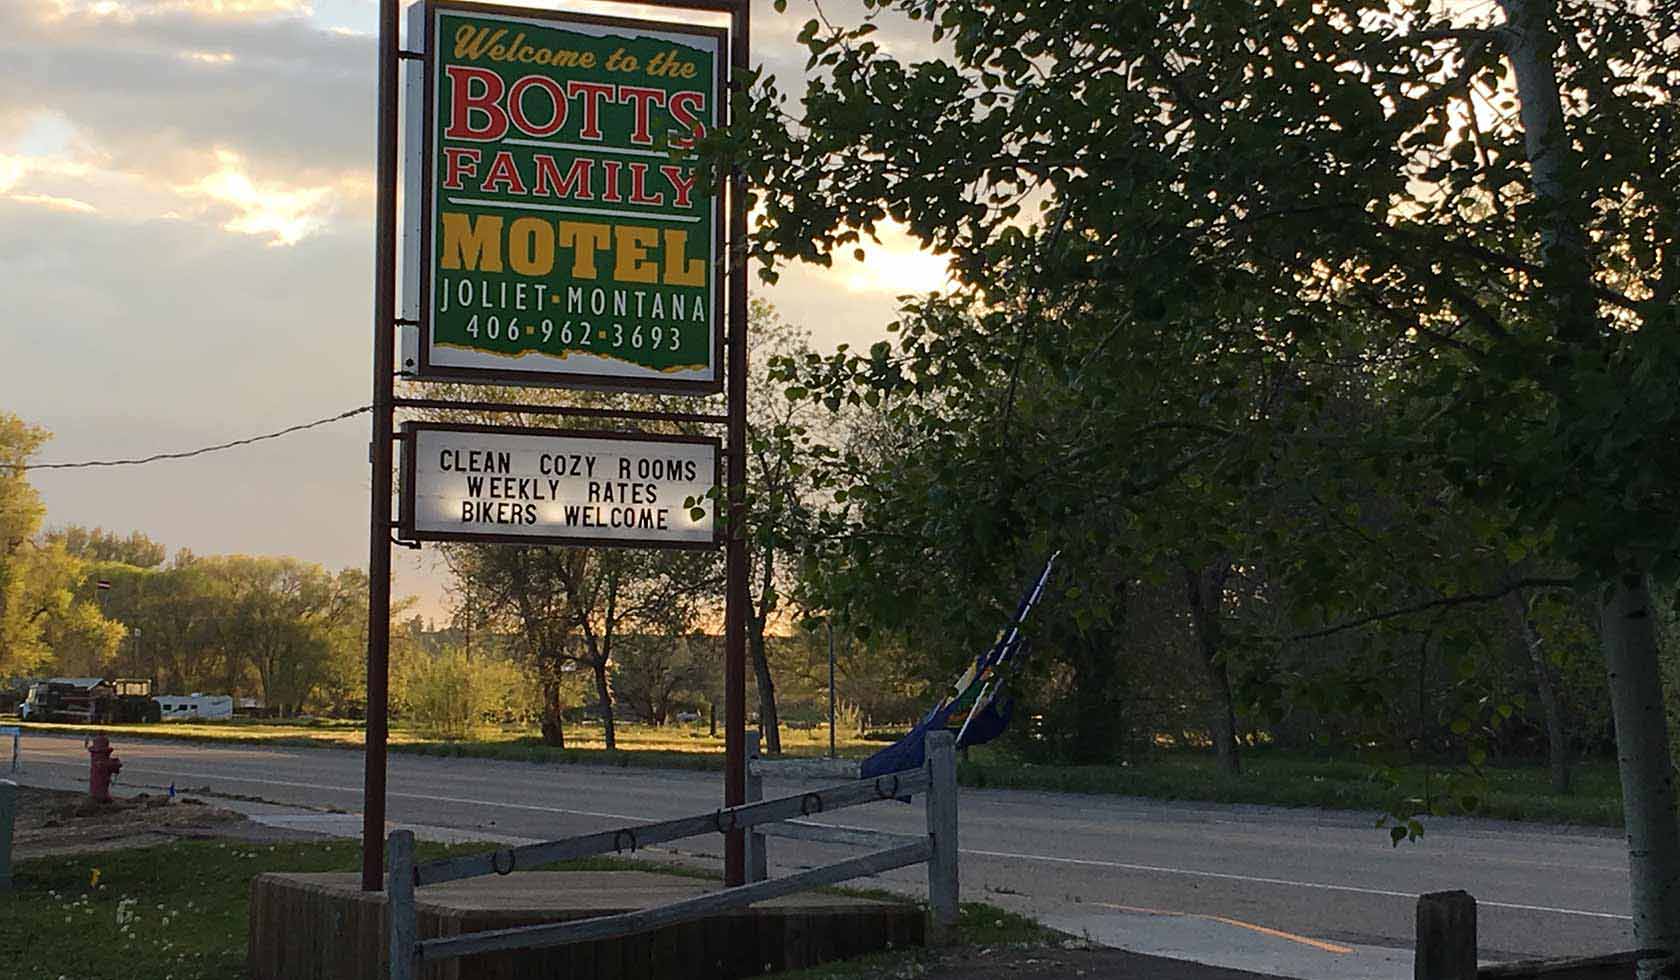 Botts Family Motel Joliet Montana